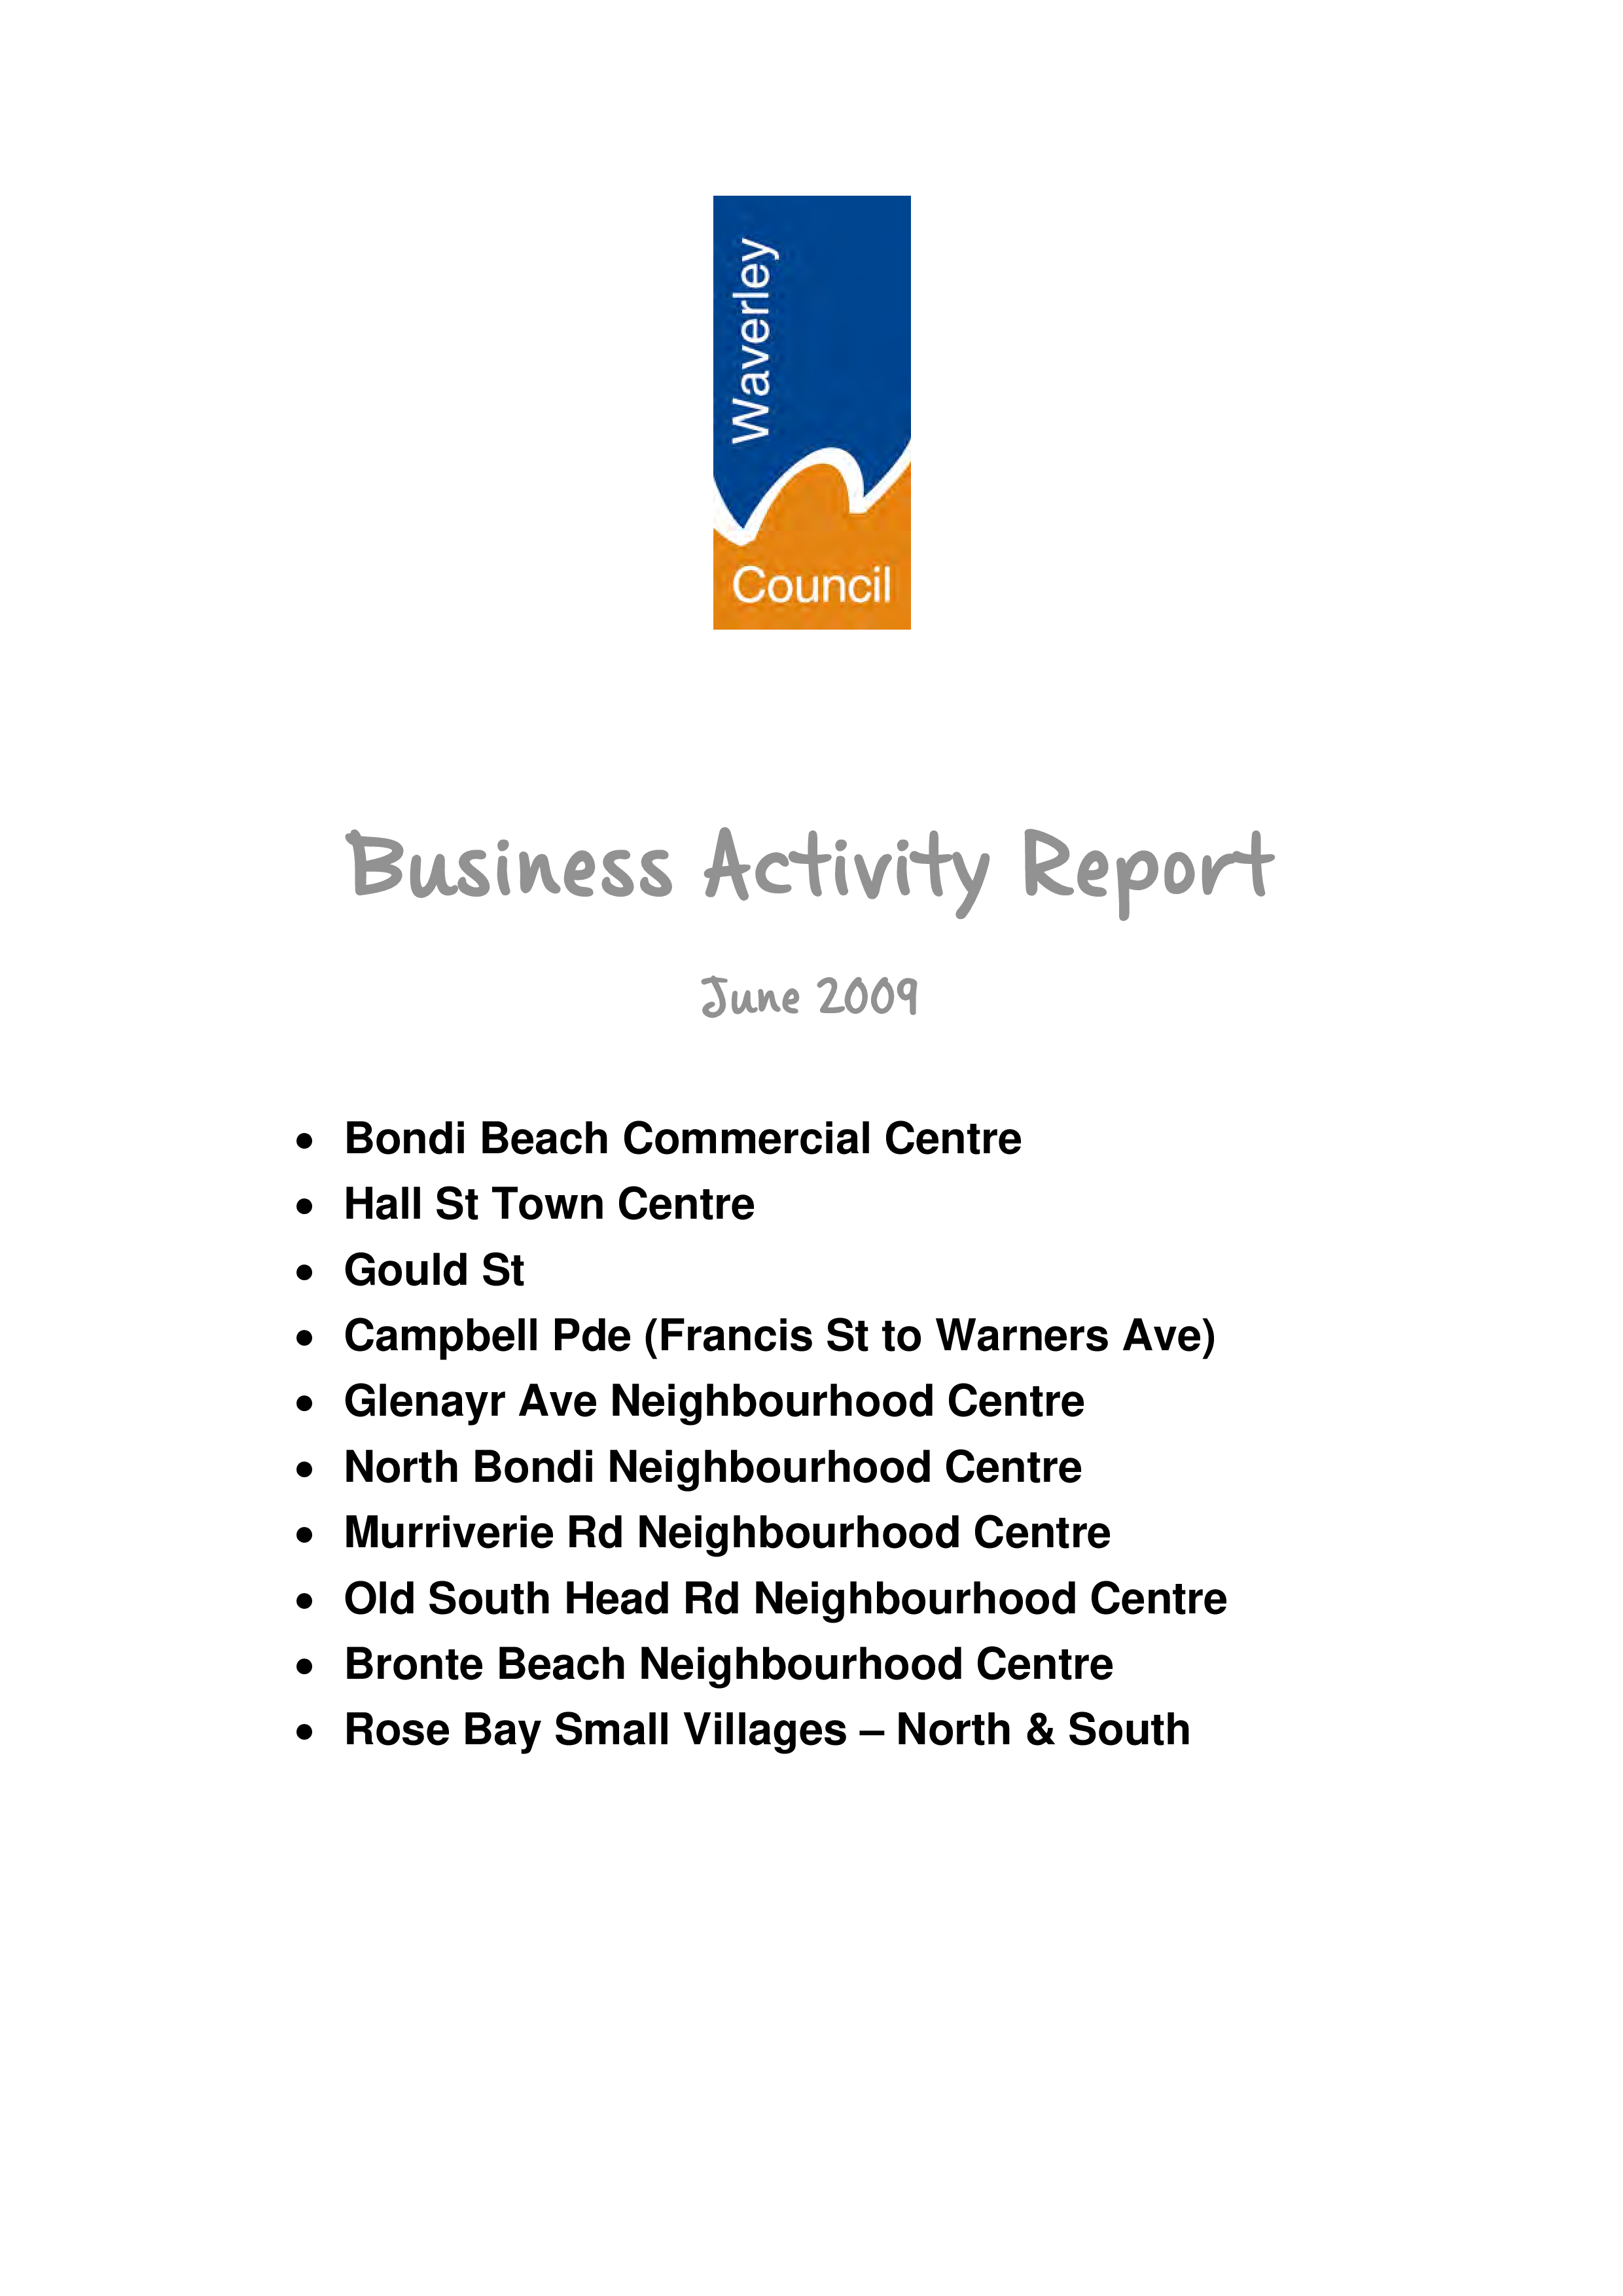 retail business activity report plantilla imagen principal